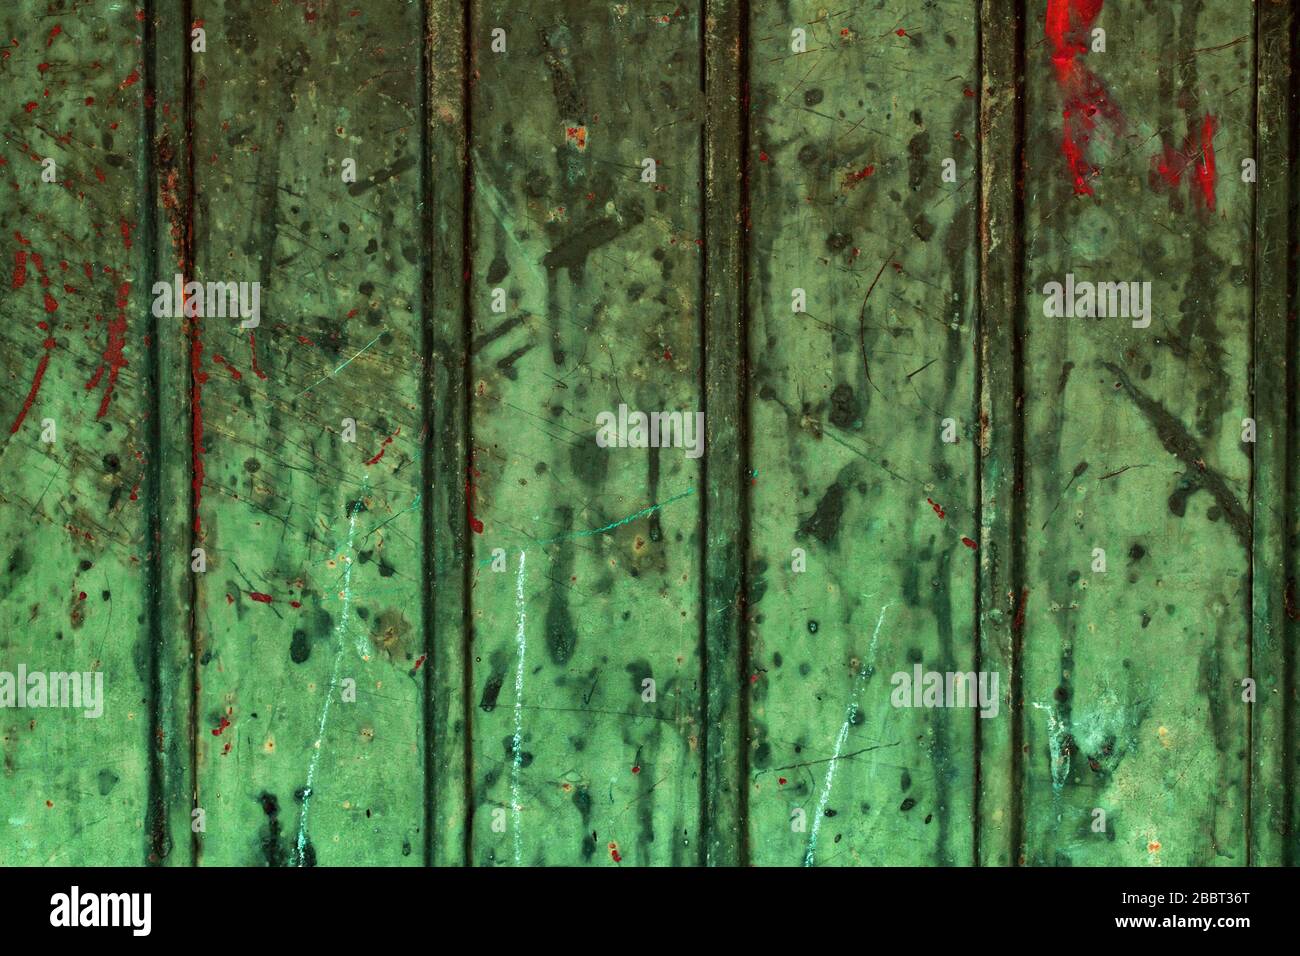 Grunge Green Metallic Texture As Background Worn Metal Surface Stock Photo Alamy